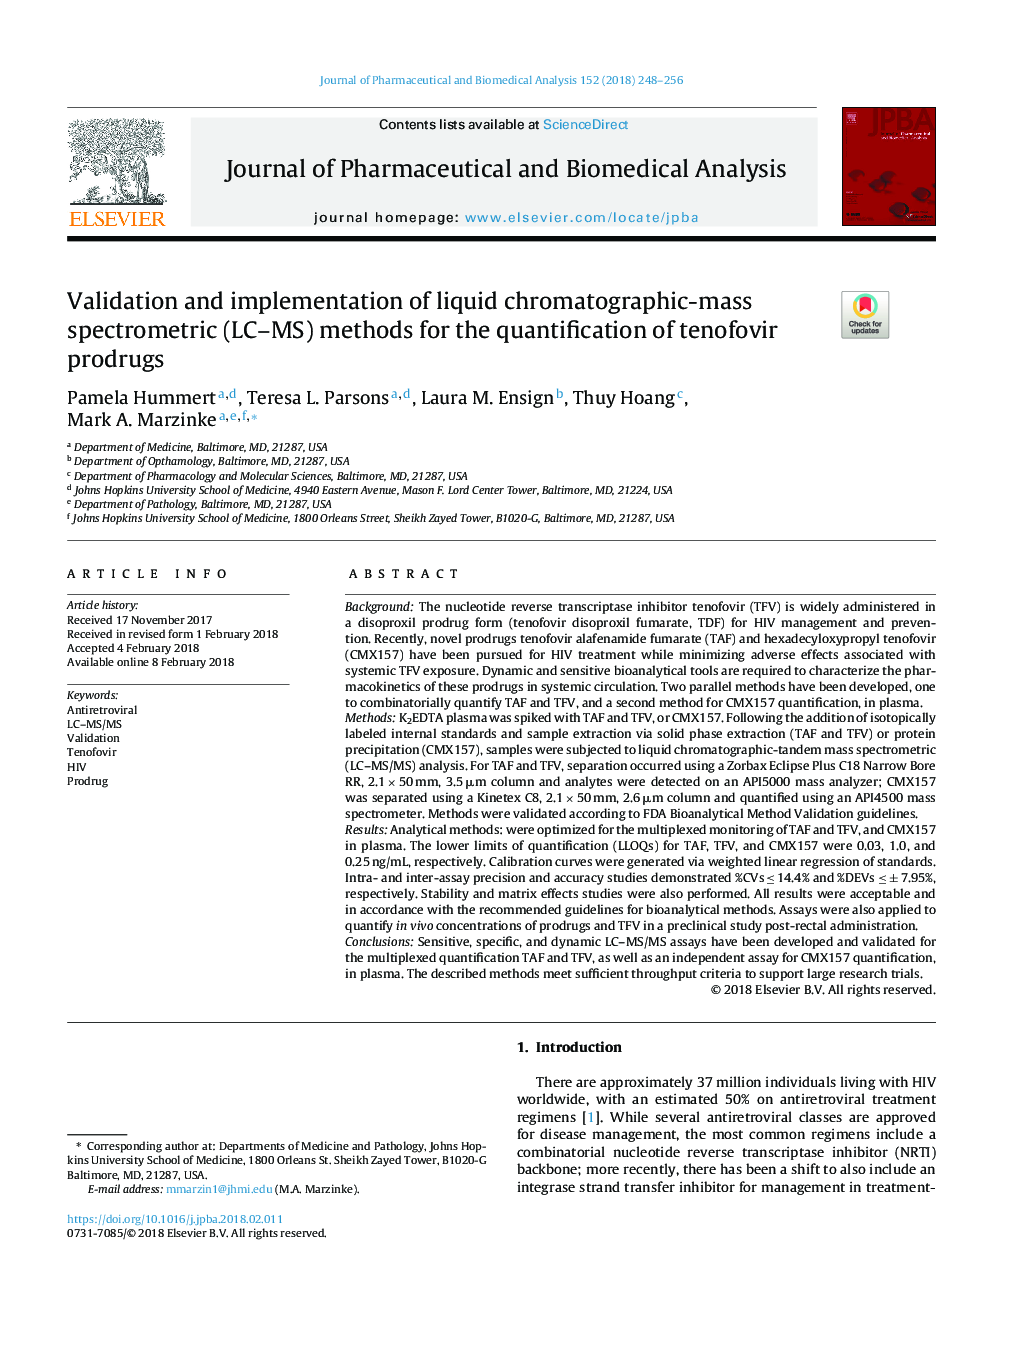 Validation and implementation of liquid chromatographic-mass spectrometric (LC-MS) methods for the quantification of tenofovir prodrugs